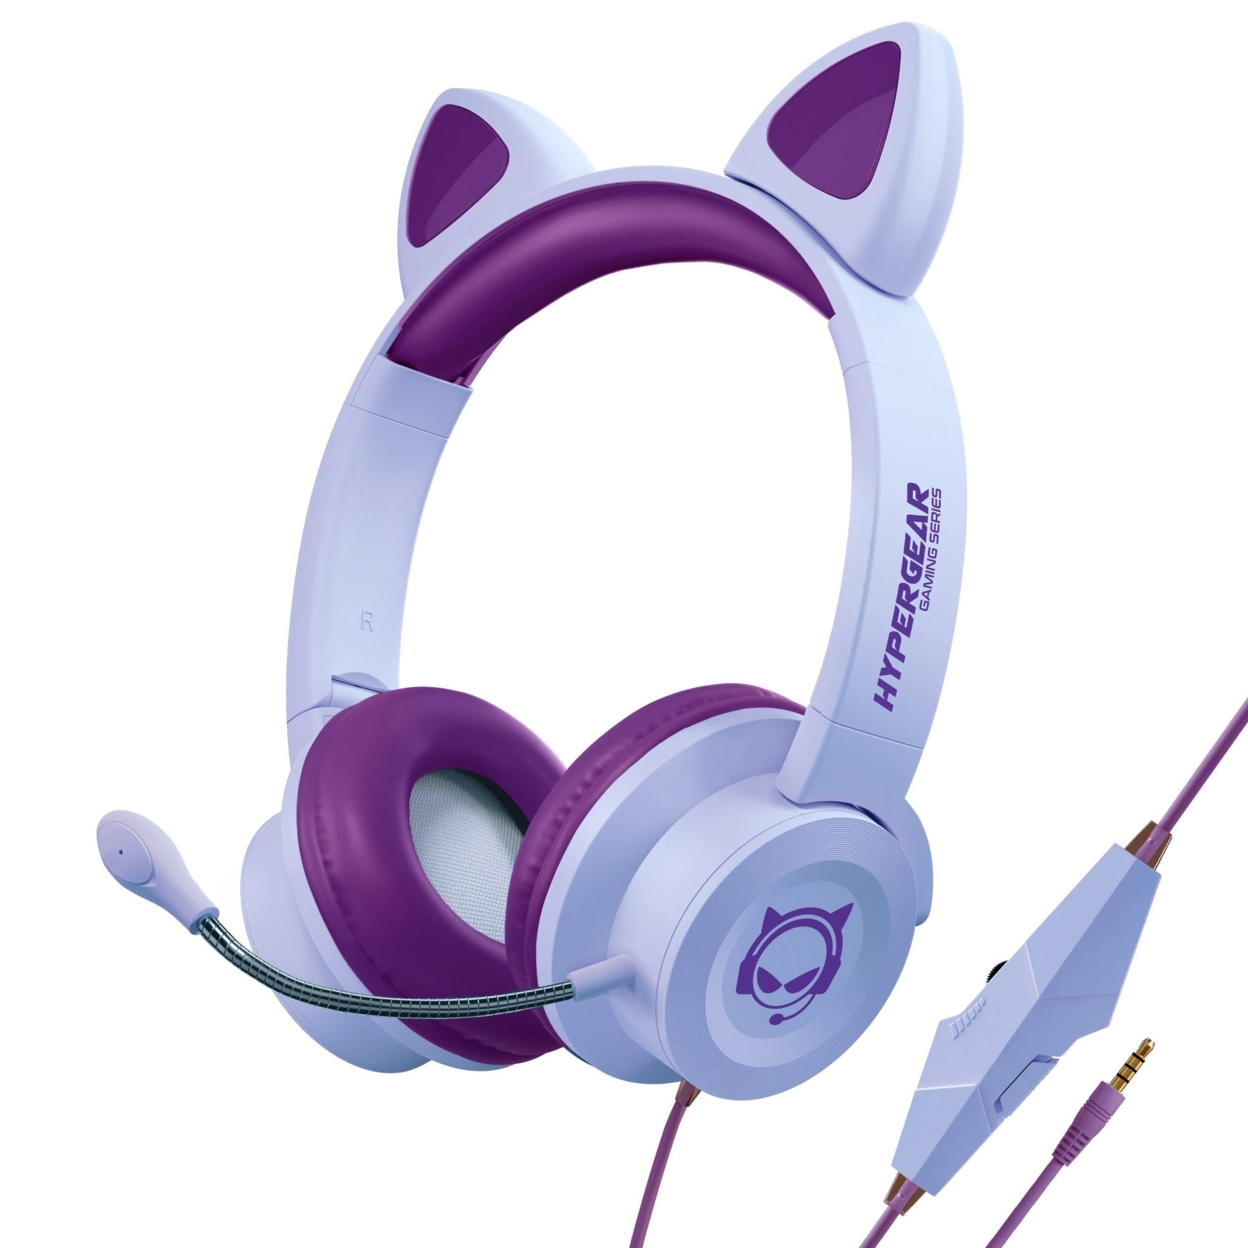 HyperGear Kombat Kitty Gaming Headset With Detachable Mic - Purple